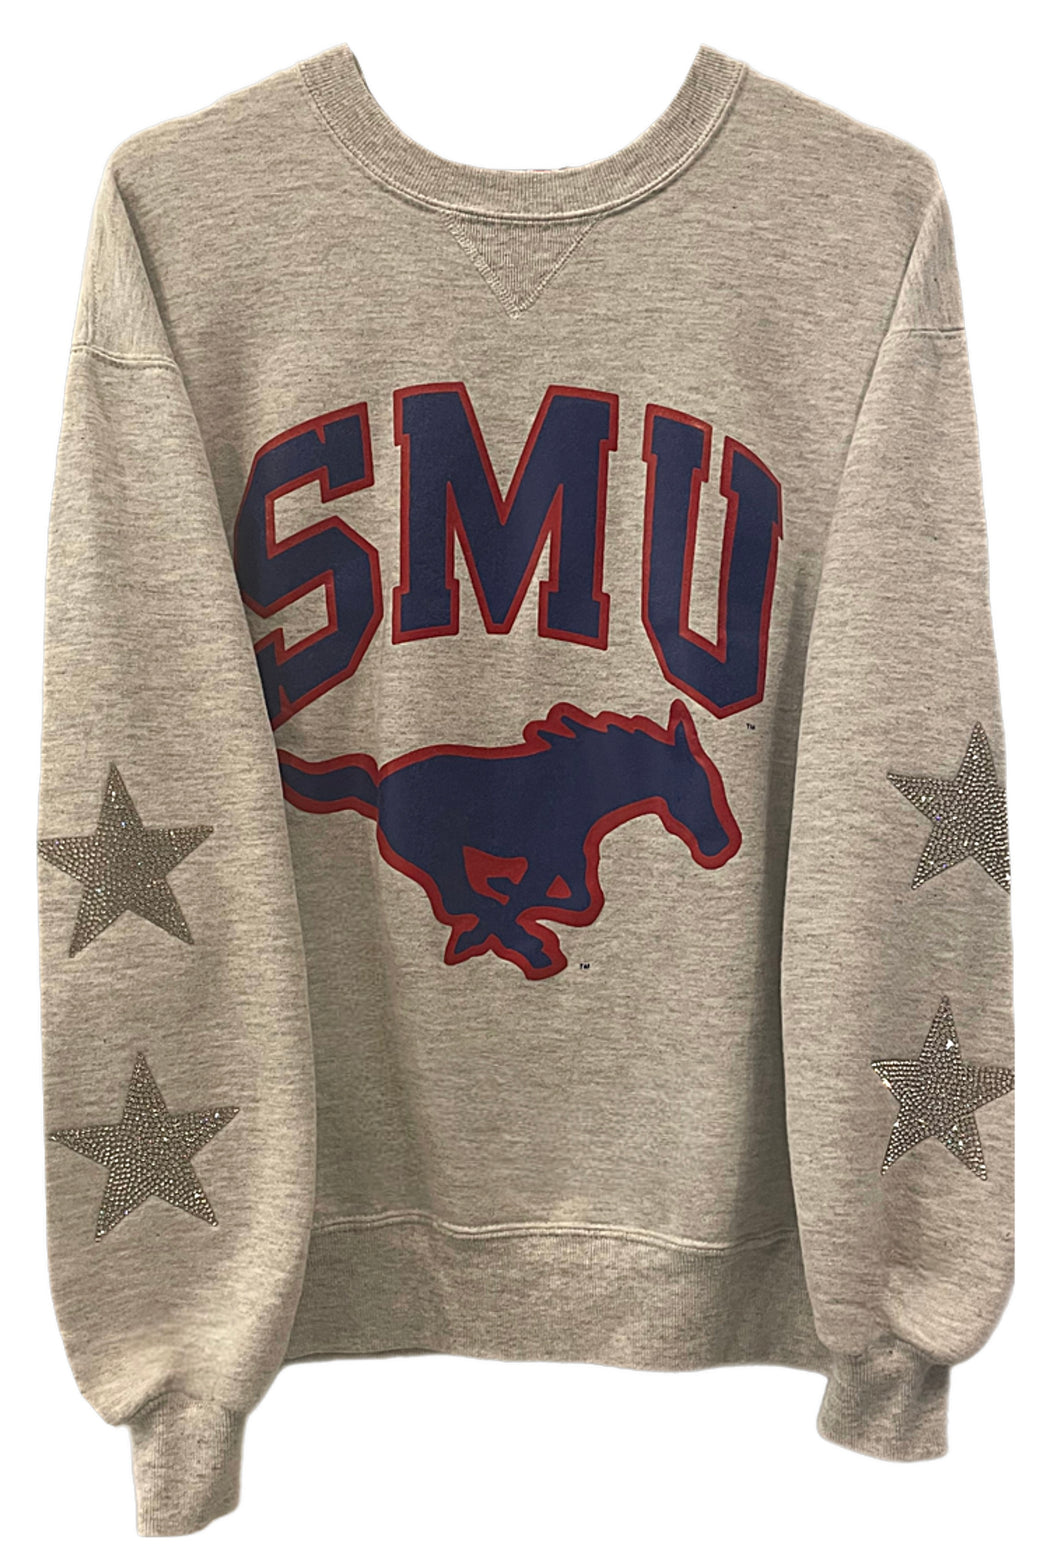 Southern Methodist University, One of a KIND Vintage Frayed SMU Sweatshirt with Crystal Star Design.